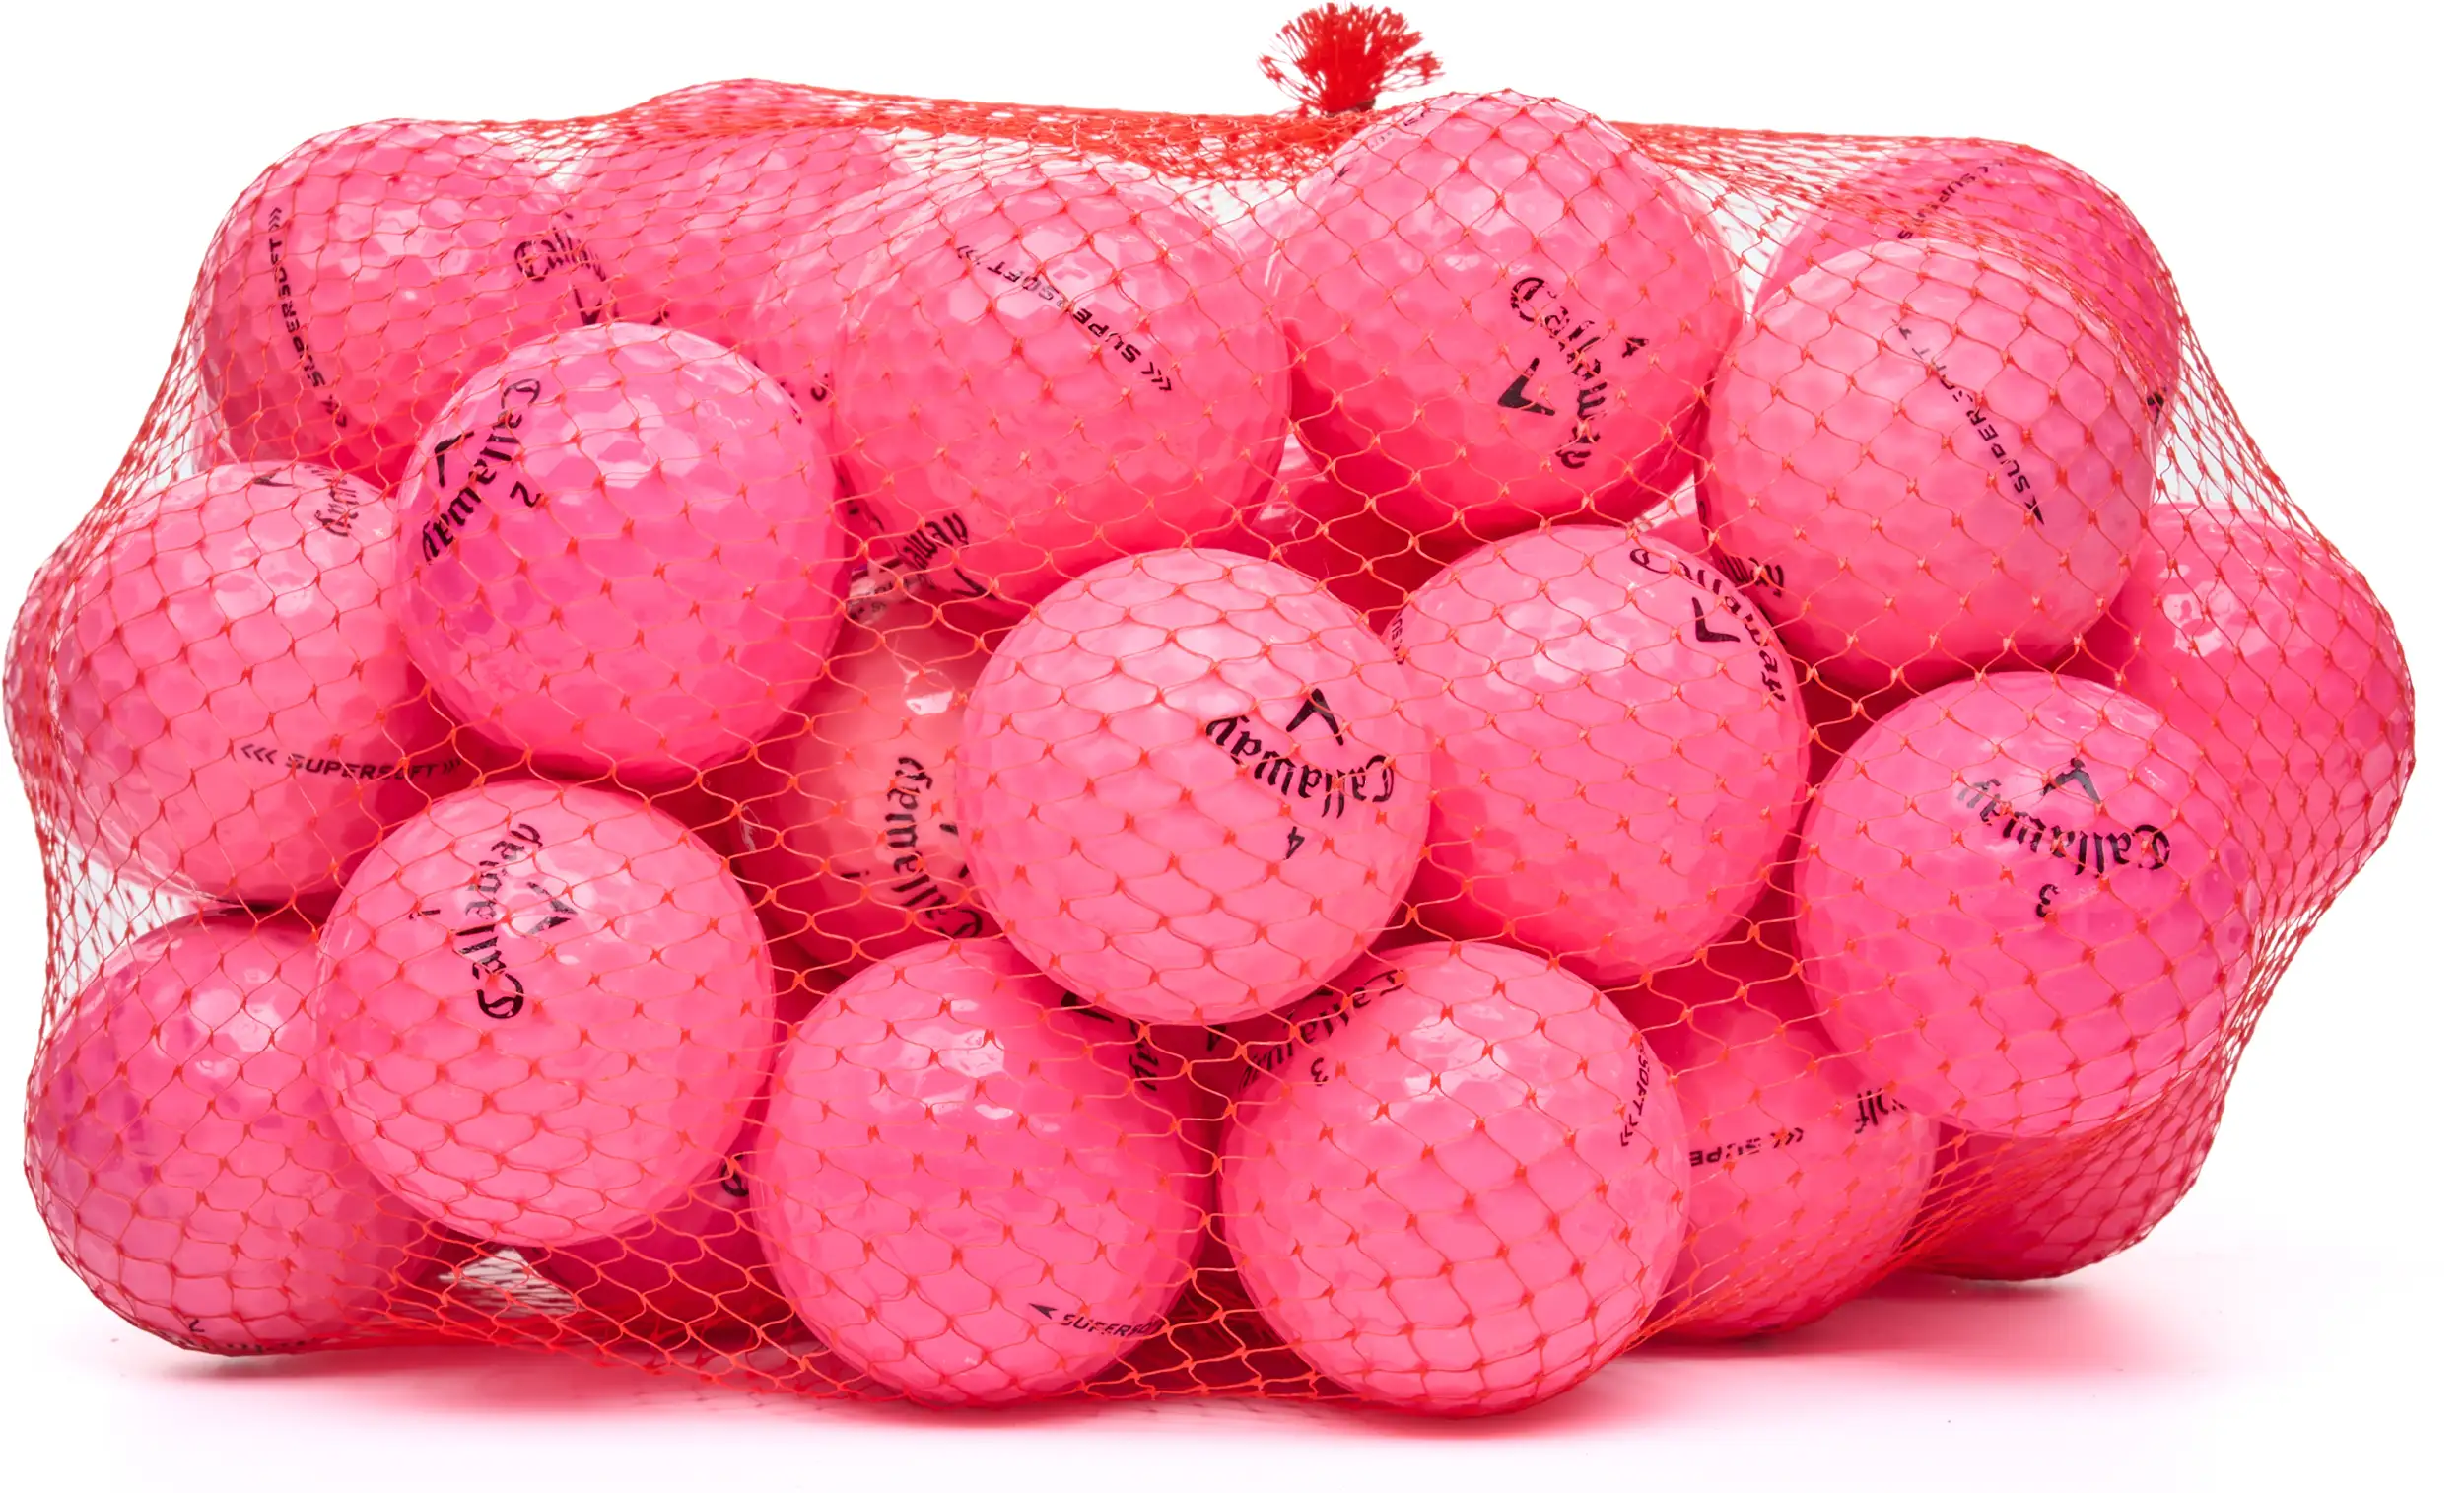 50 Callaway Supersoft Lakeballs, pink